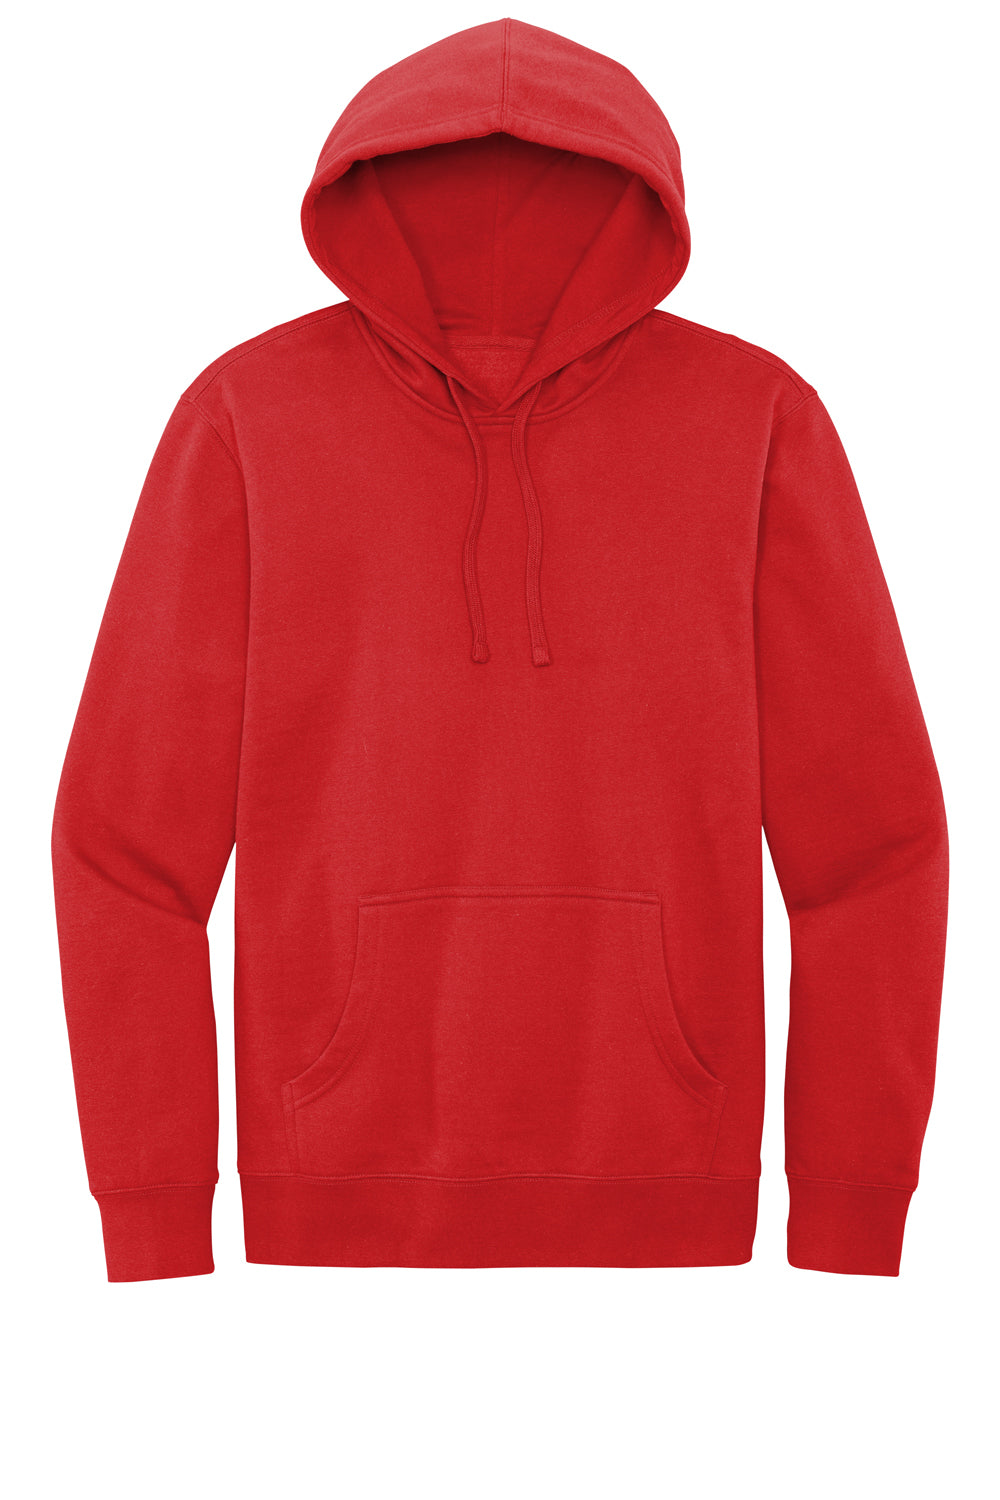 District DT6100 Mens Very Important Fleece Hooded Sweatshirt Hoodie Fiery Red Flat Front